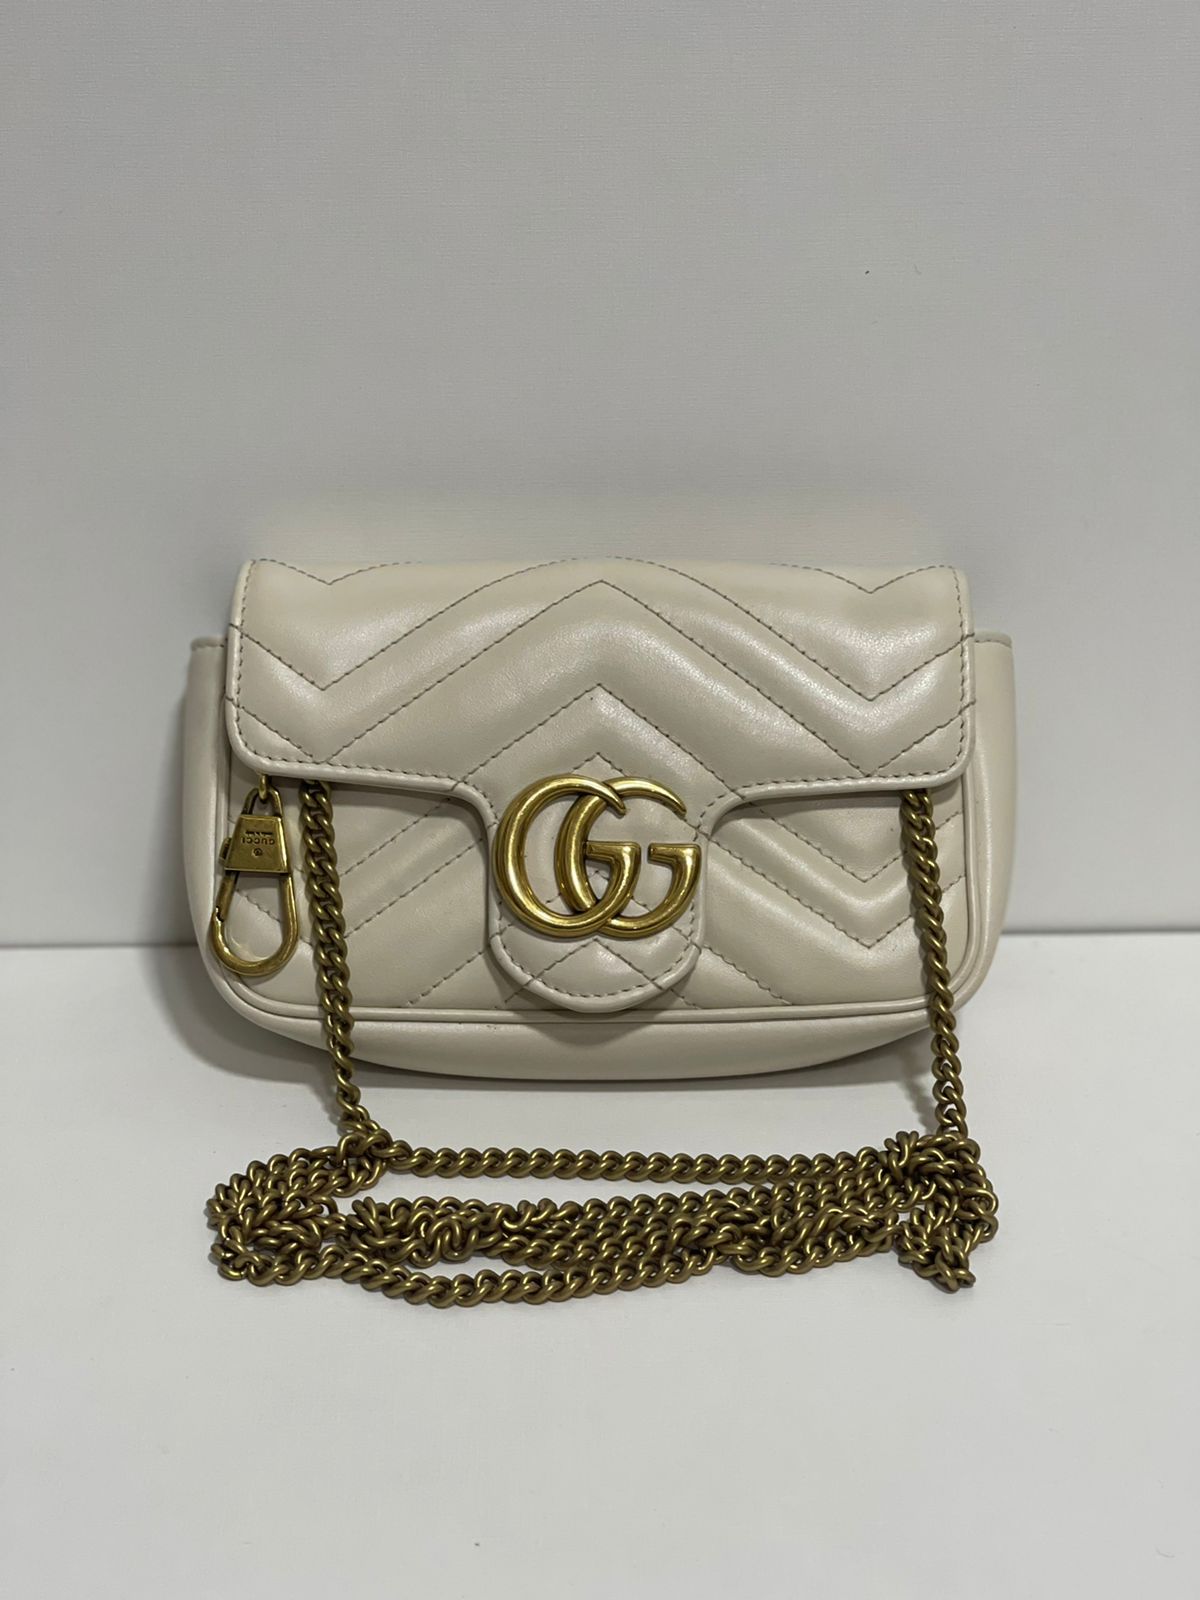 Bolsa Gucci Original transversal GG Marmont mini matelassê Feminino